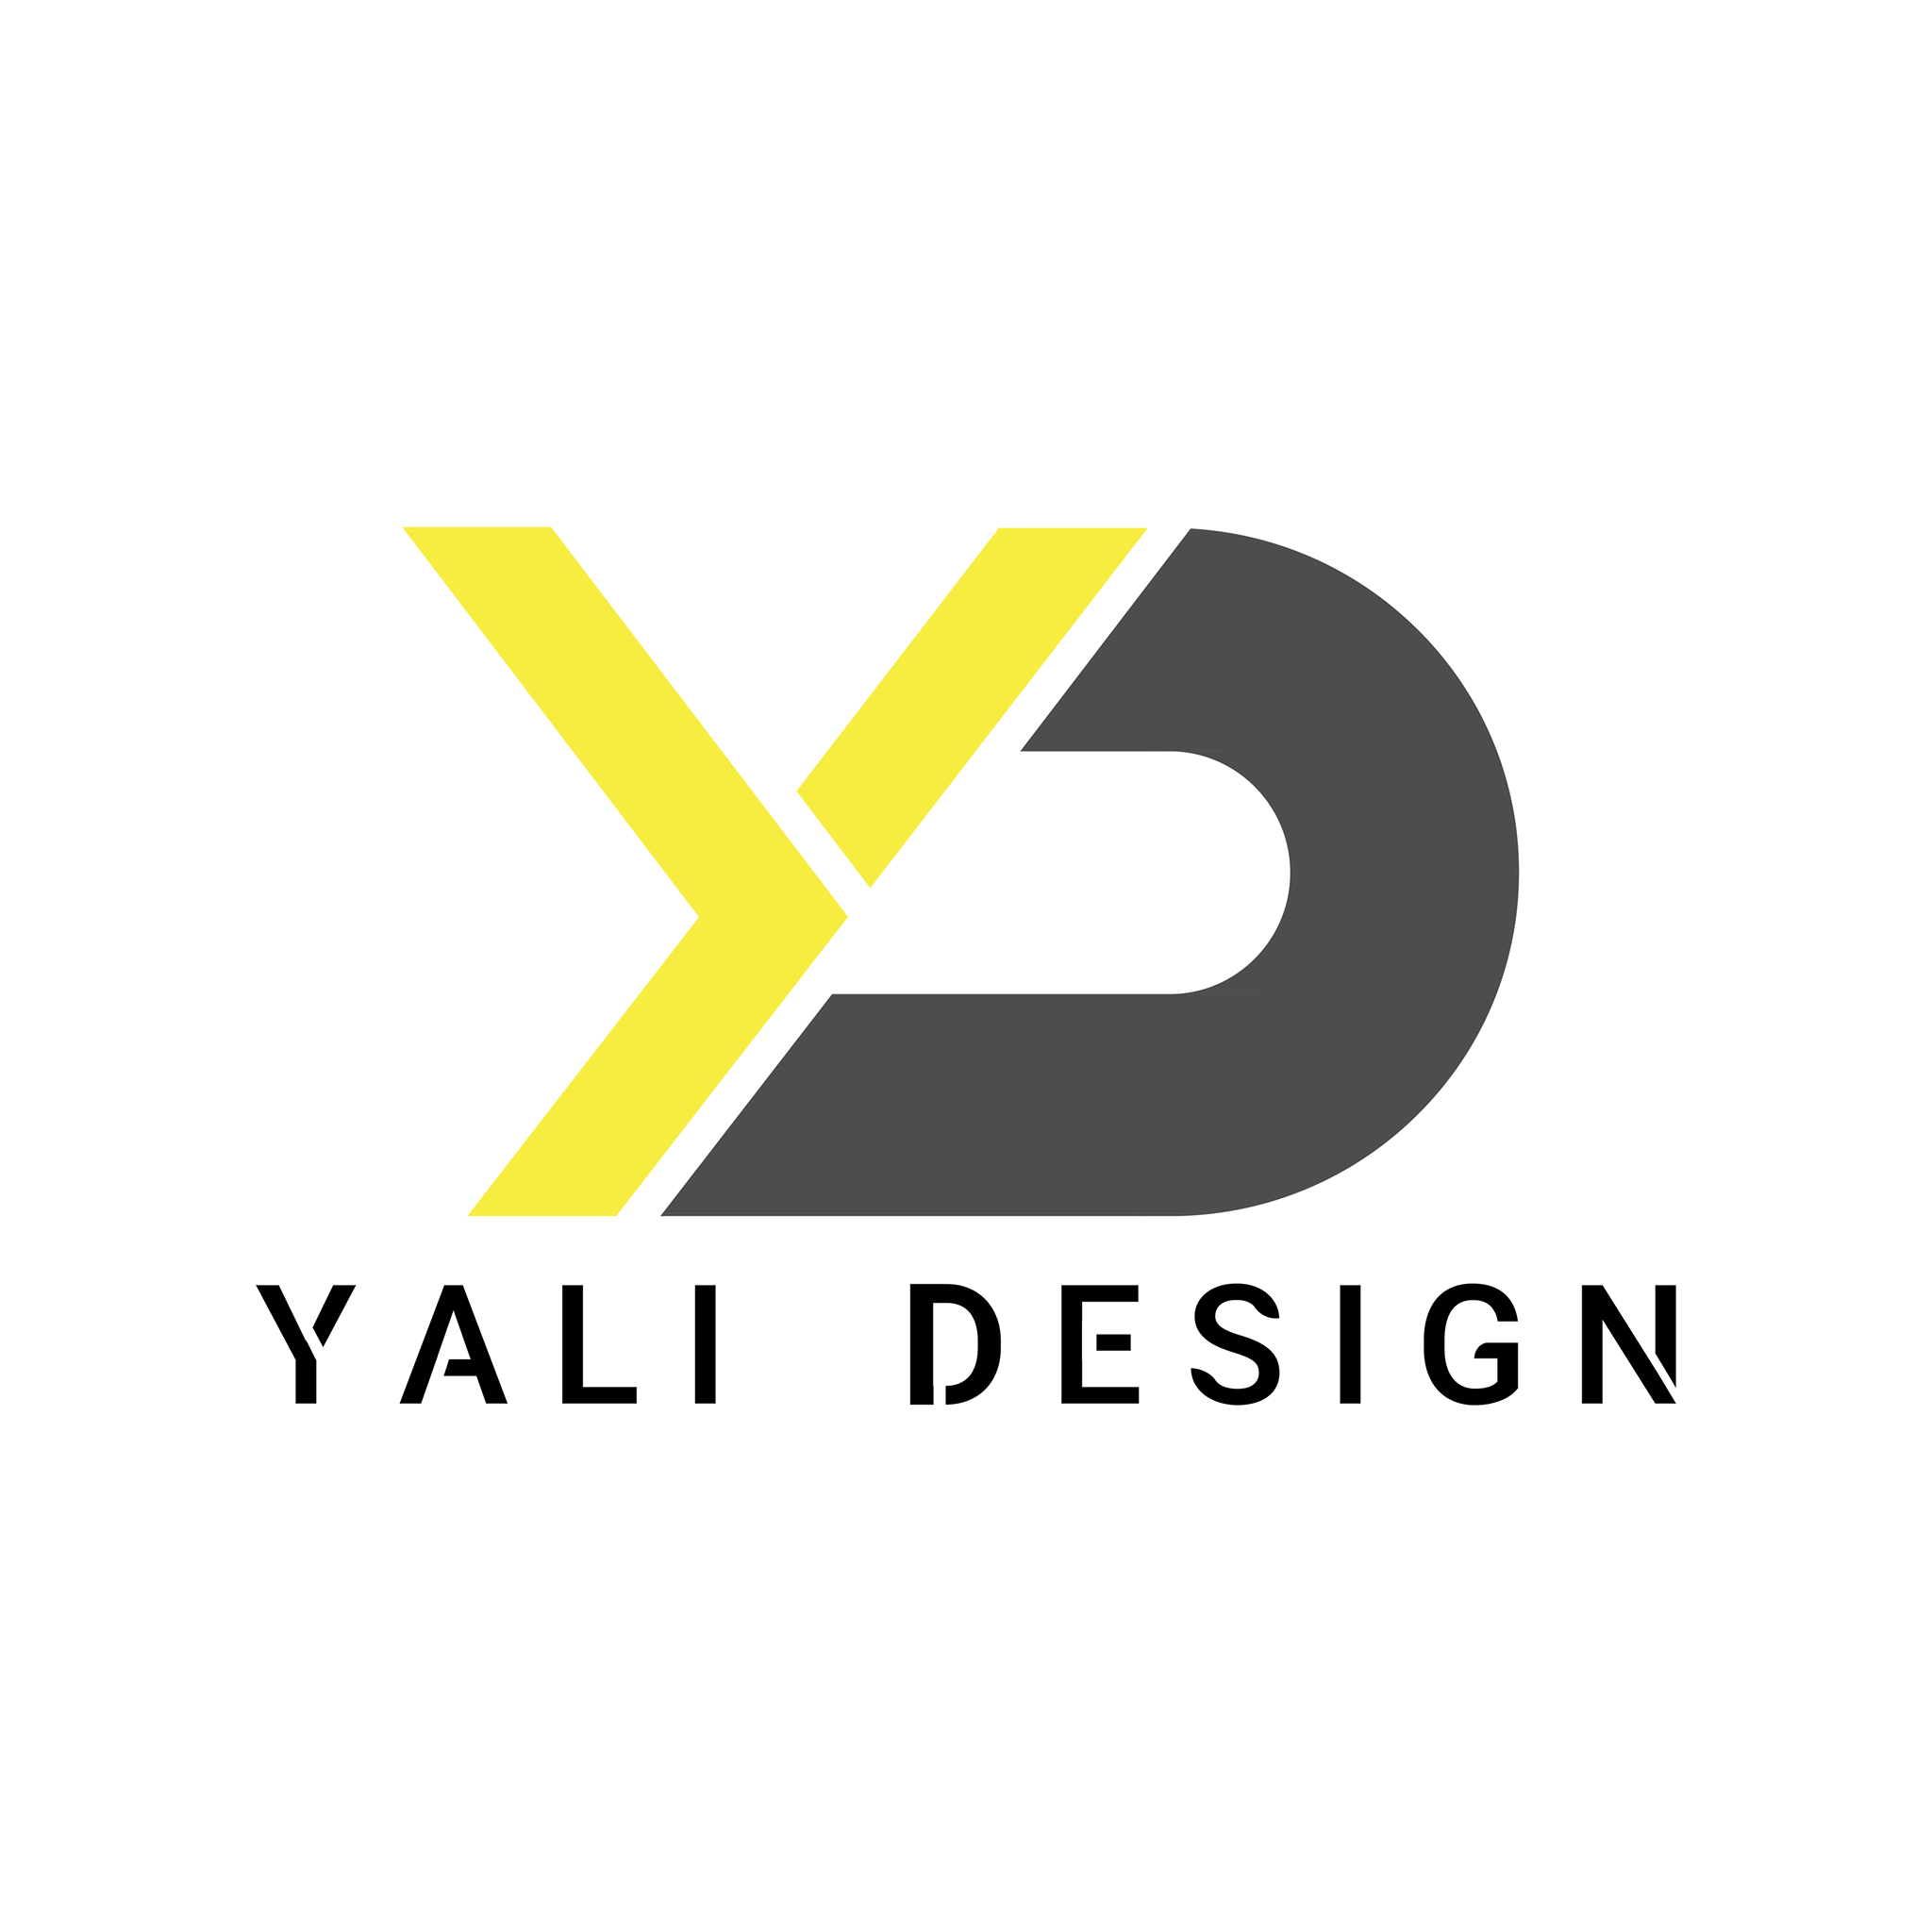 YALI DESIGN & INTERIORS|Legal Services|Professional Services